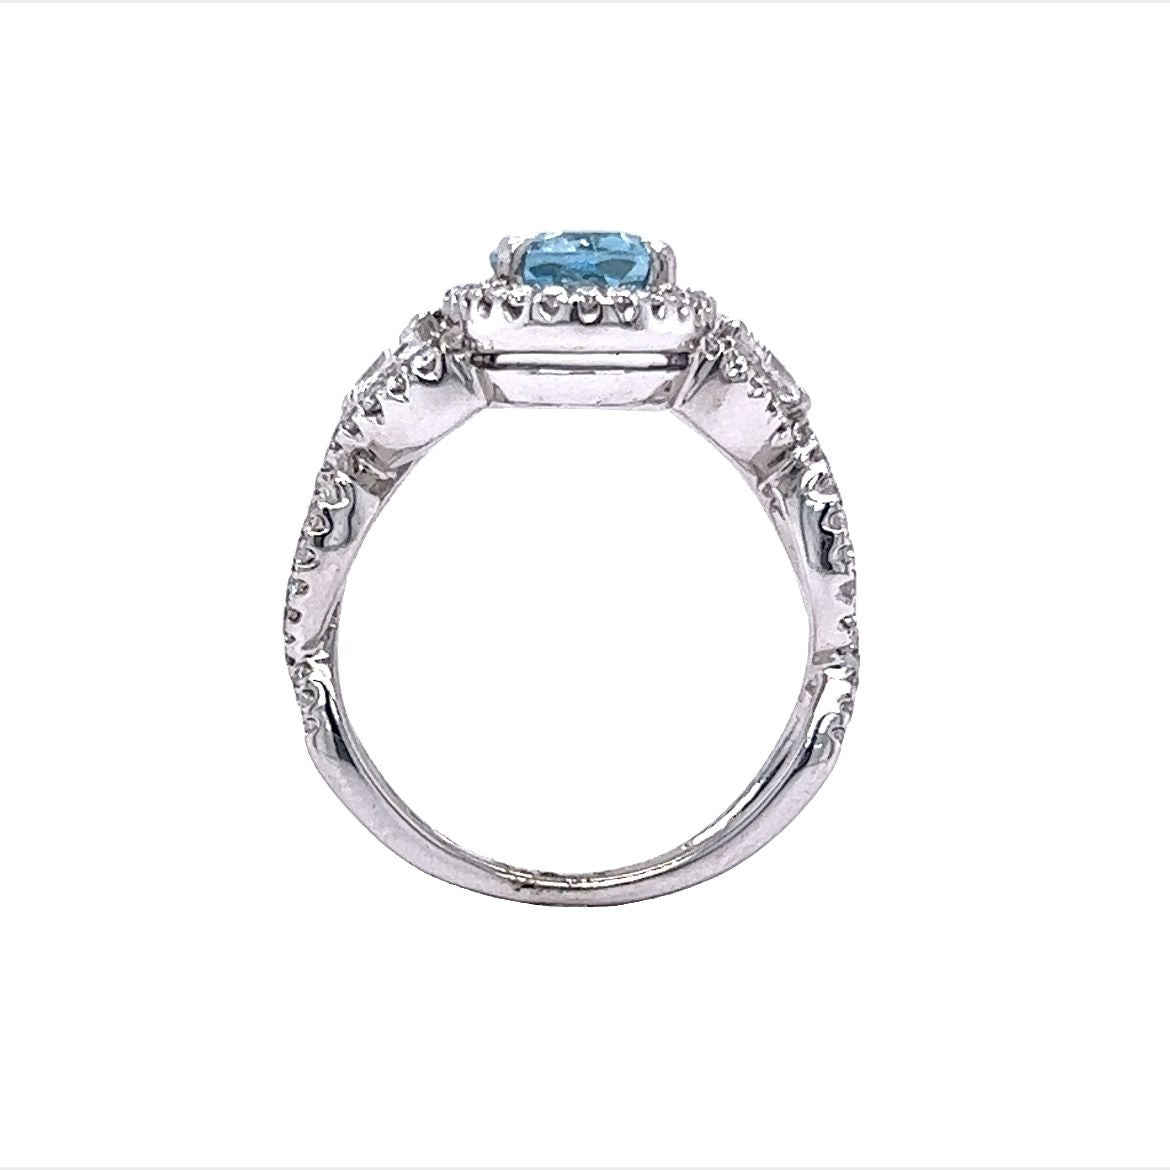 Oval Cut Aquamarine Ring w/ Diamonds in 18K White Gold